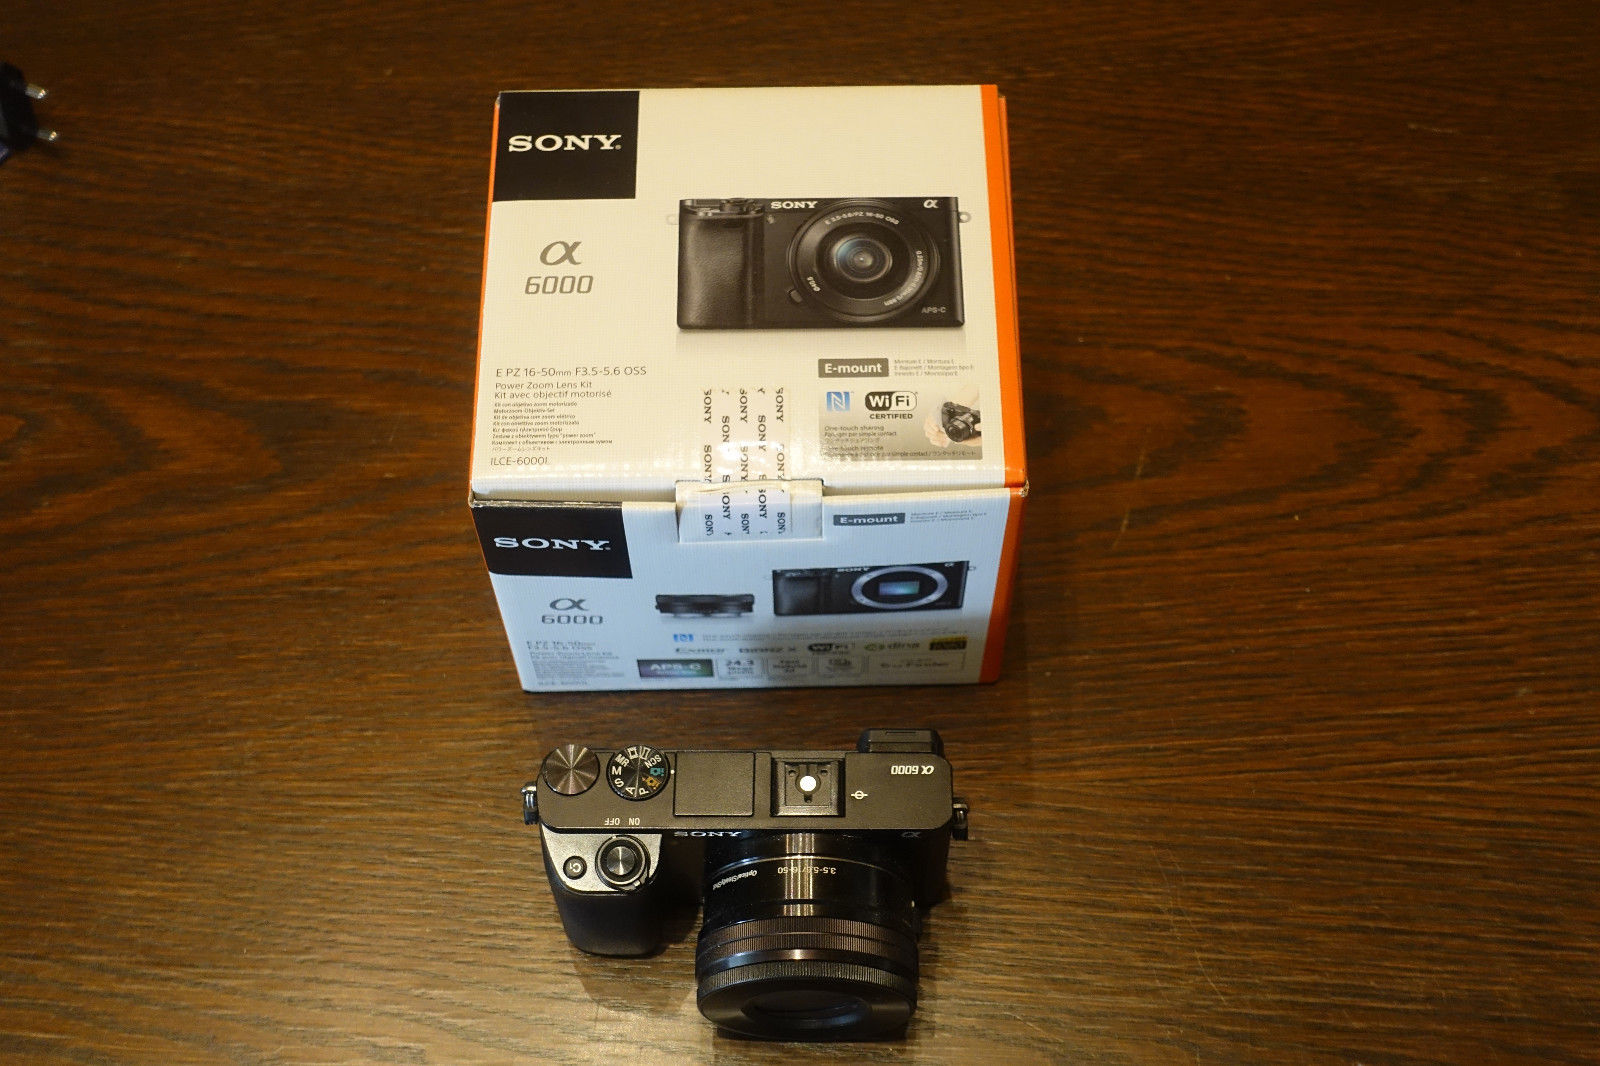 Sony Alpha ILCE-6000L 24.3 MP SLR-Digitalkamera - Schwarz (Kit m/ E PZ 16-50mm f